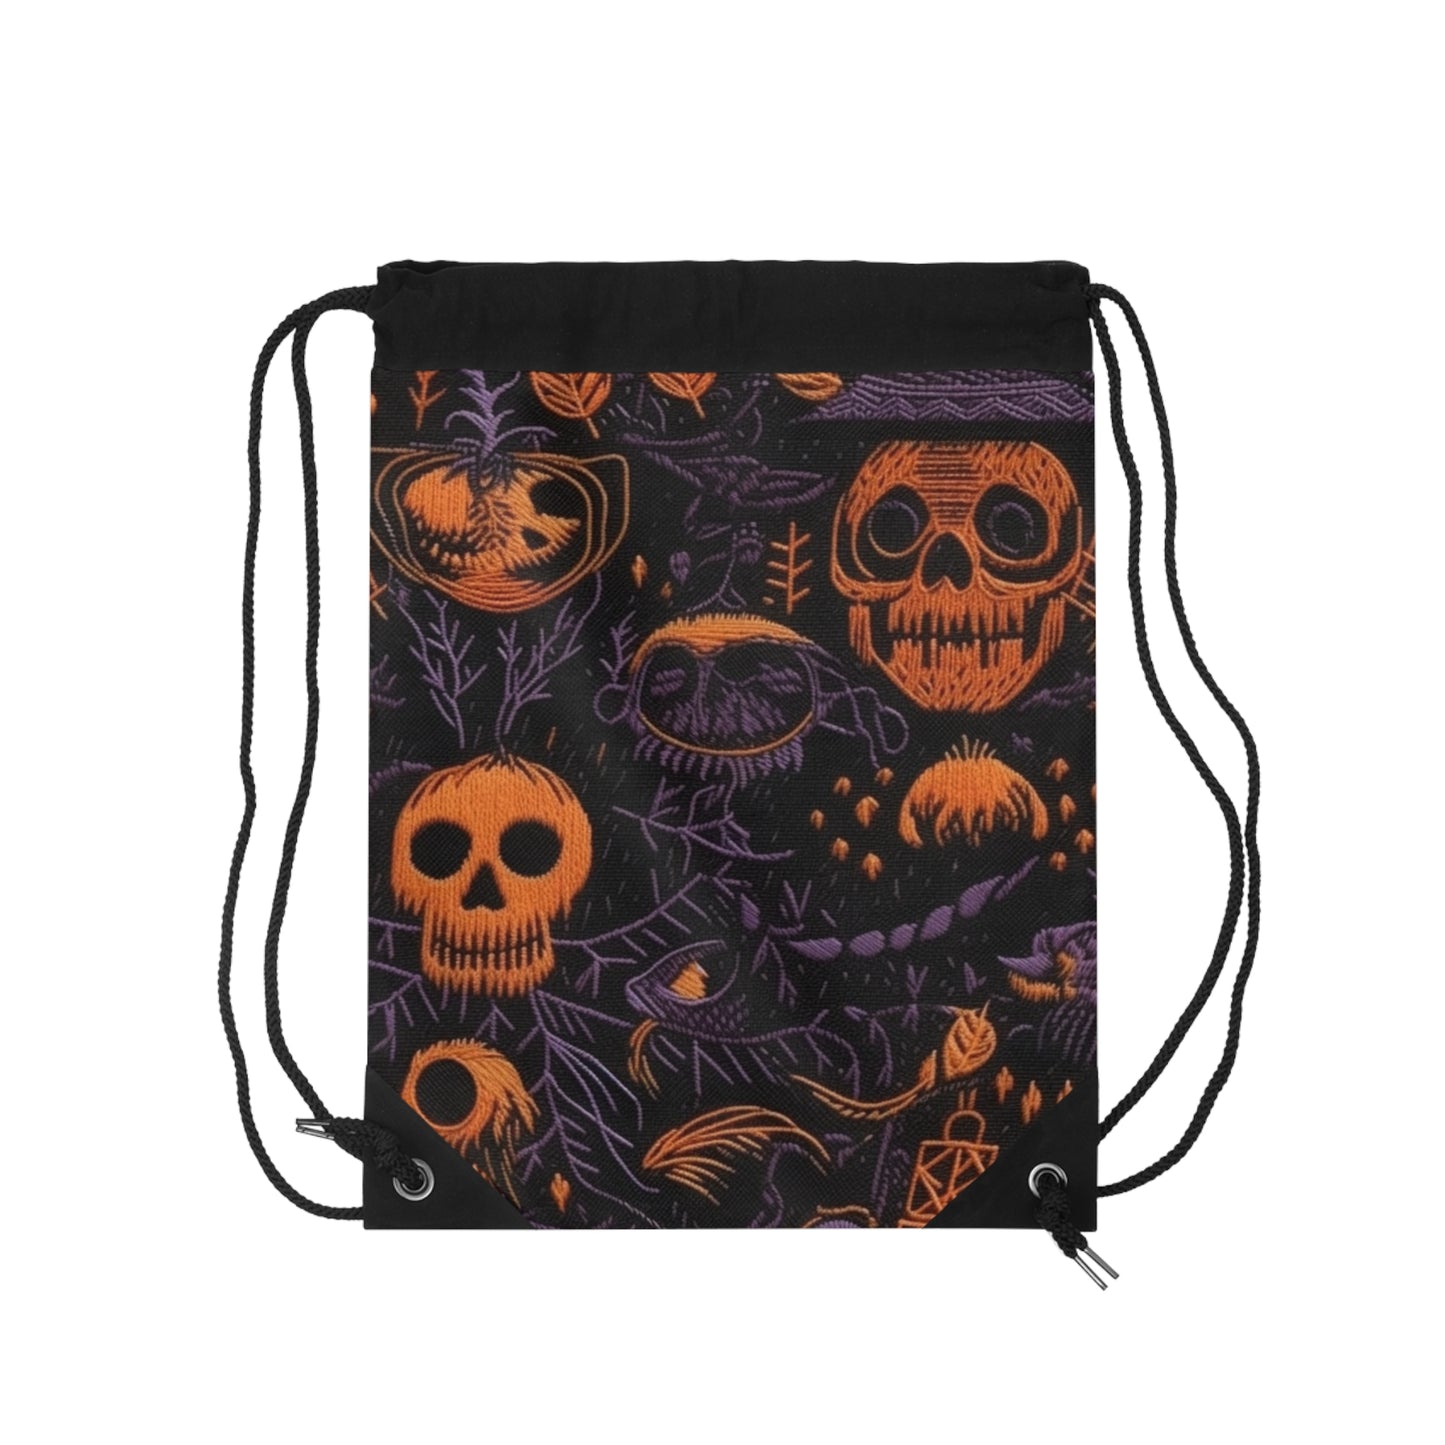 Embroidered Skull Black Purple Drawstring Bag